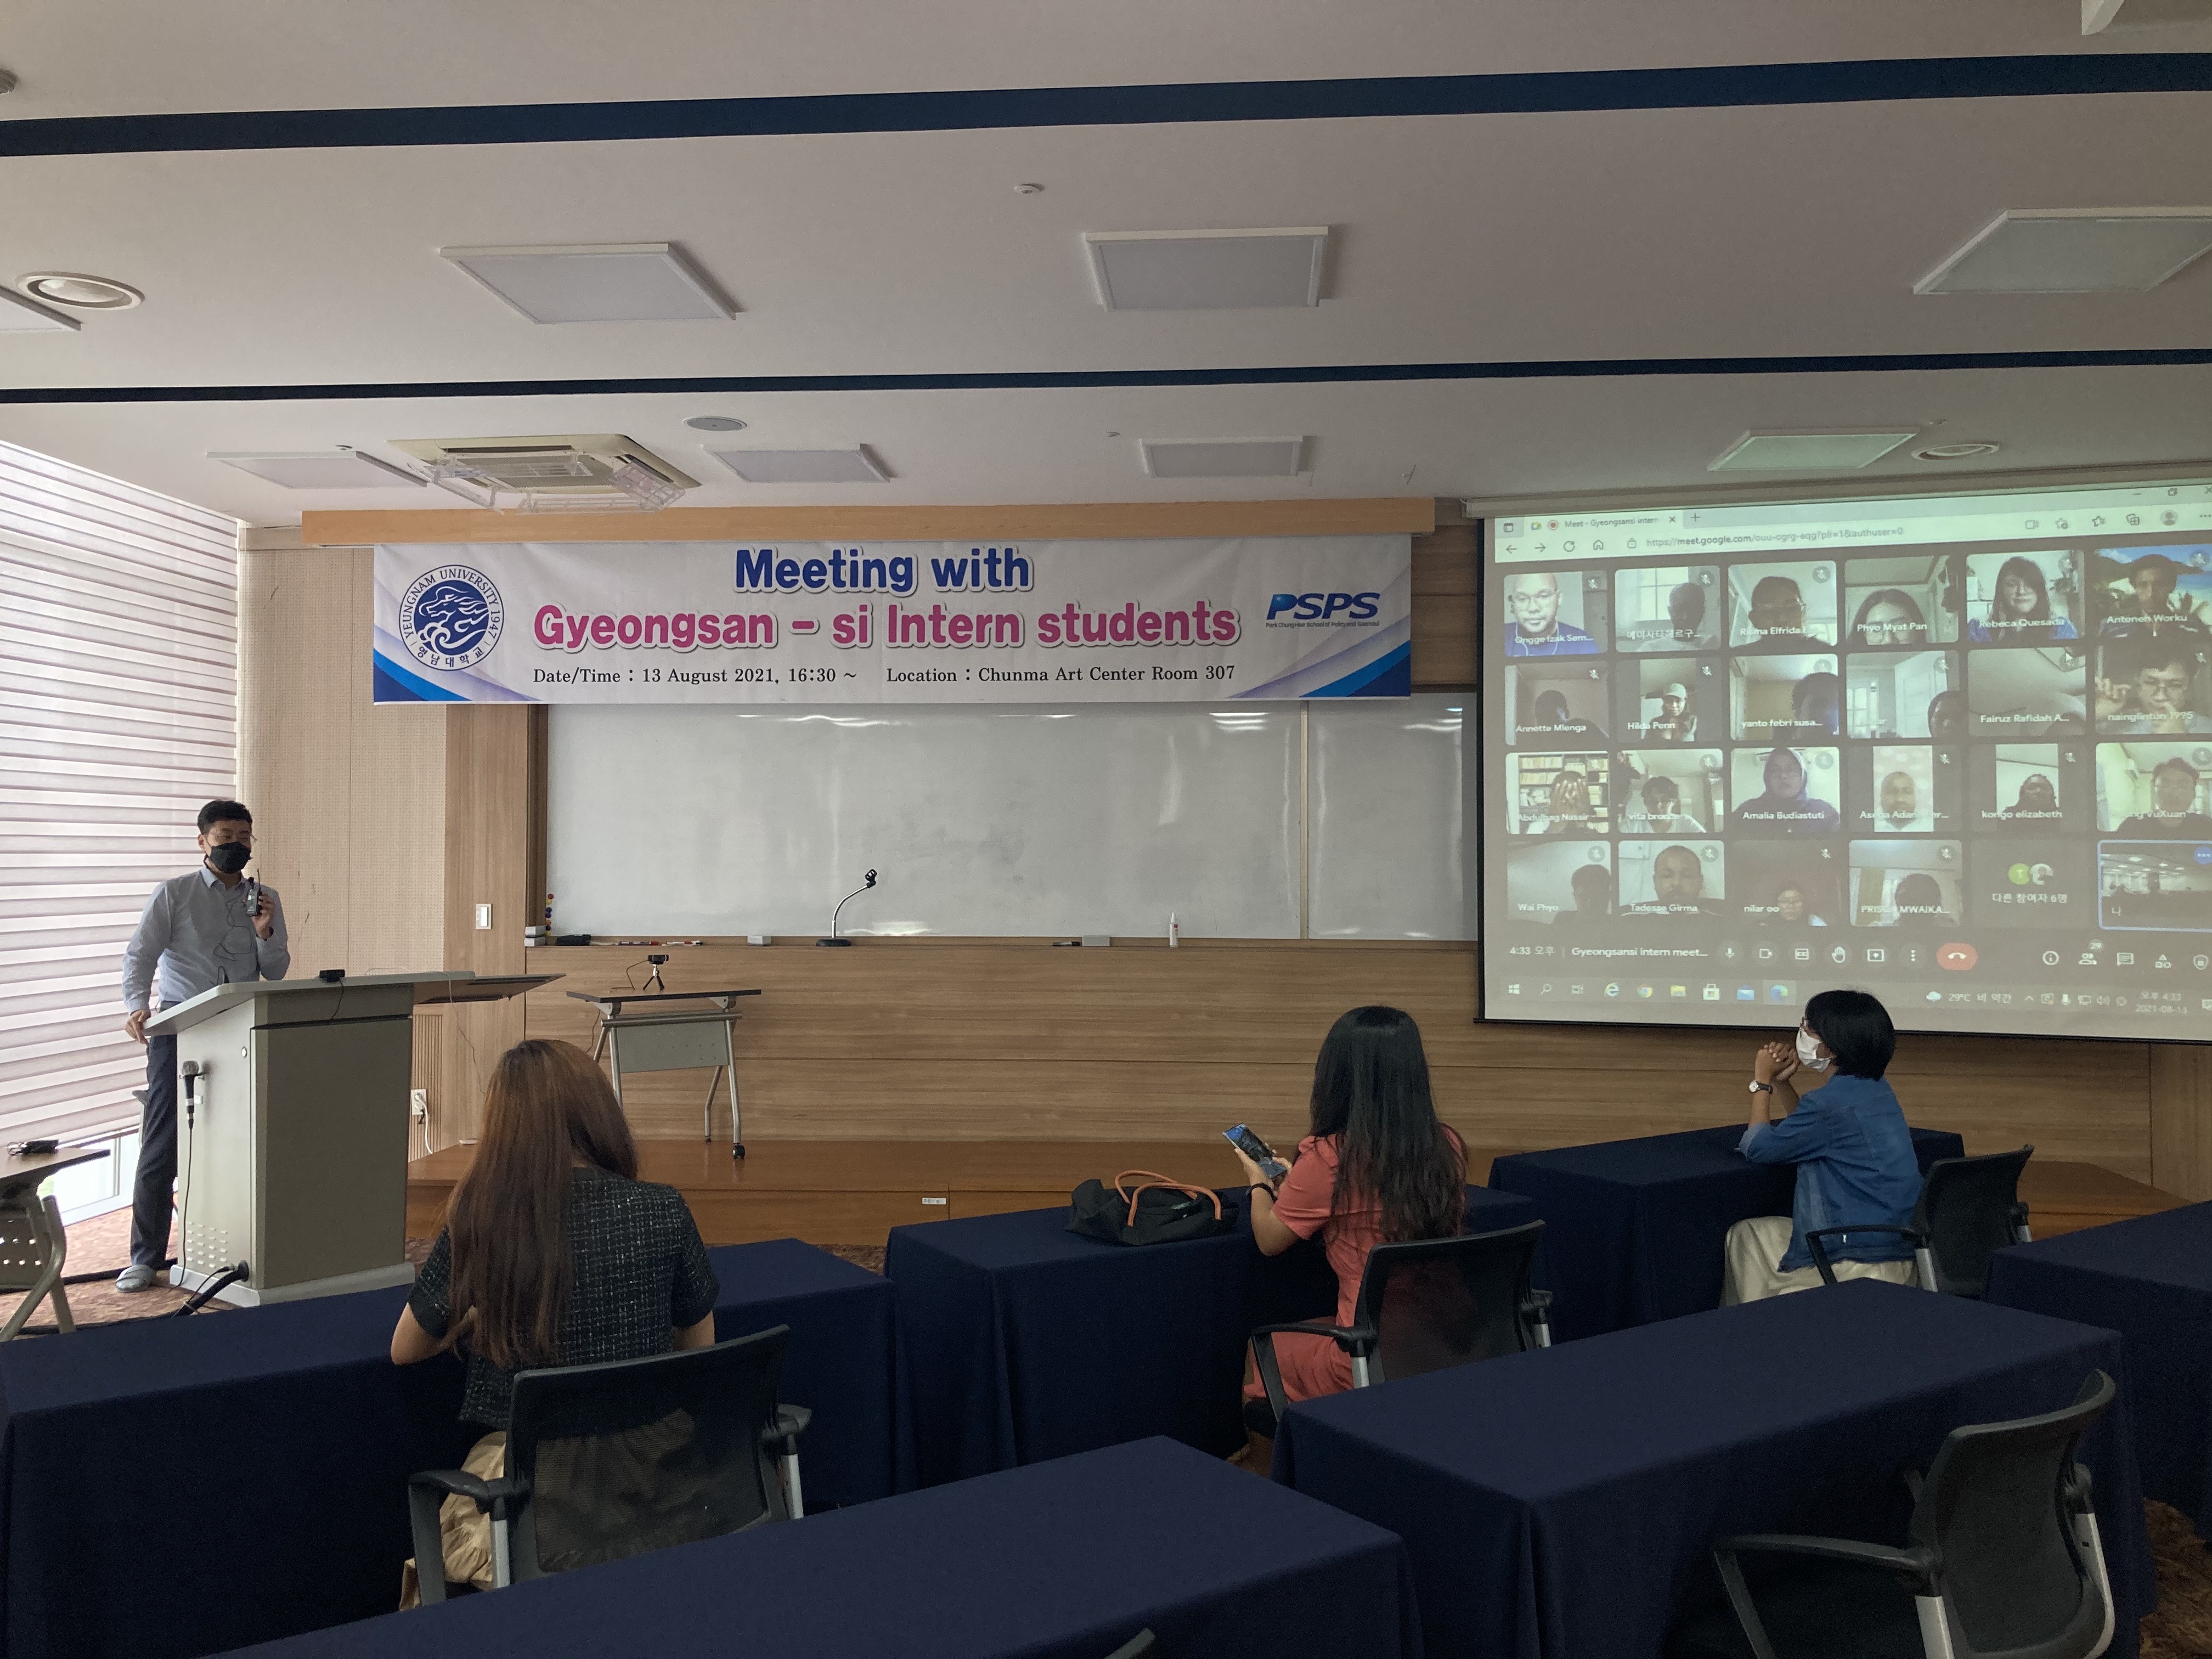 Meeting with Gyeongsan-si Intern students